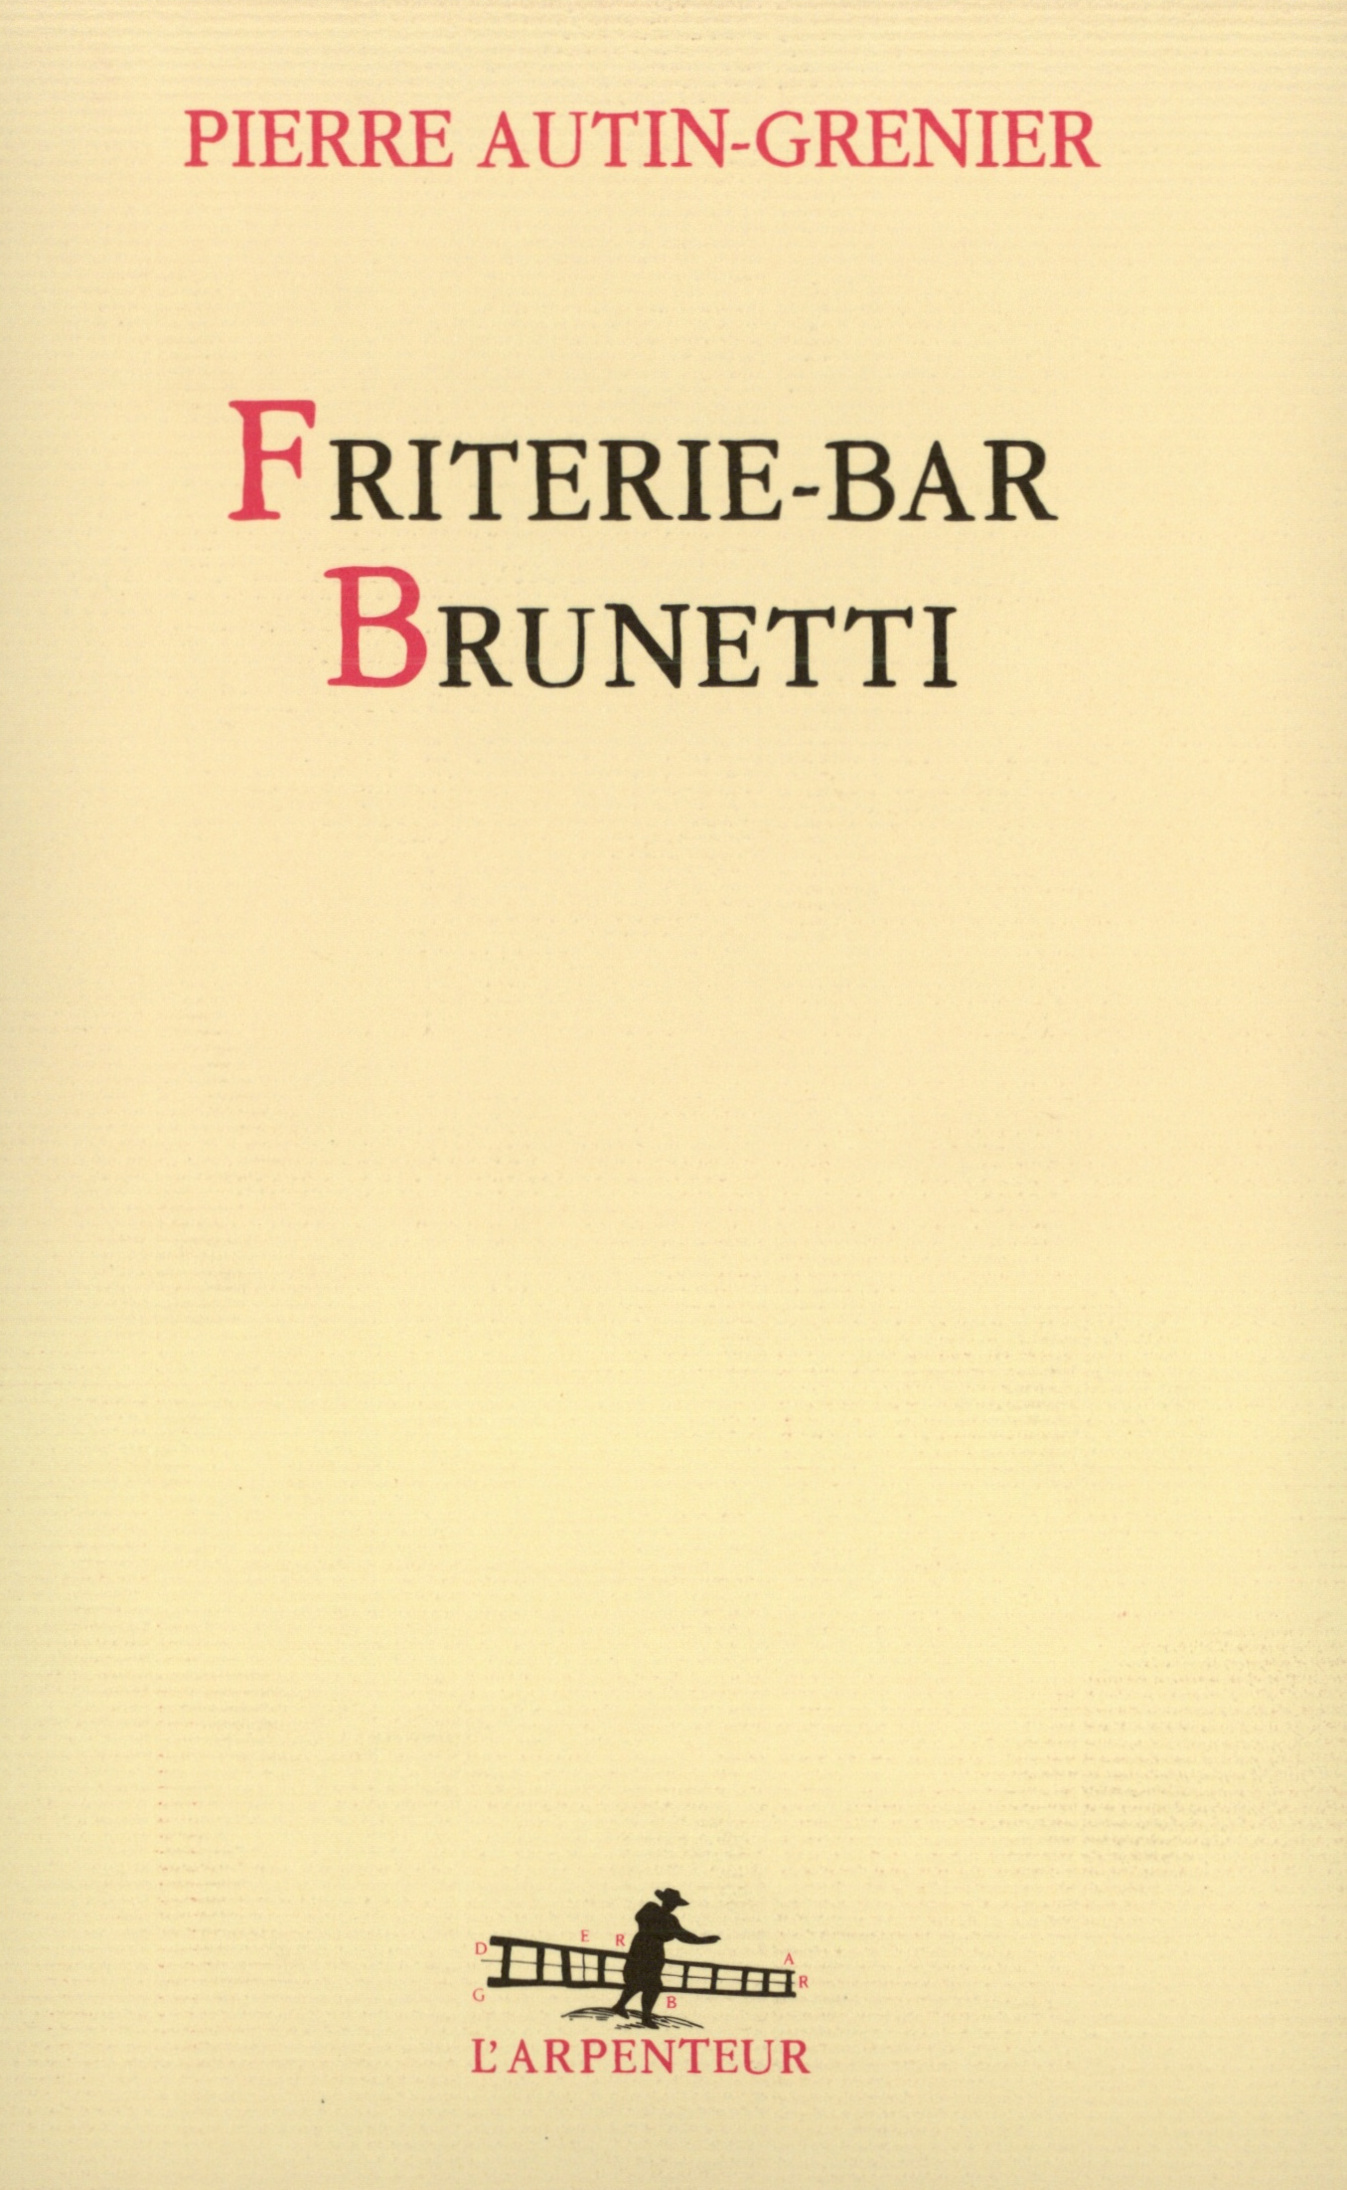 Friterie-bar Brunetti Pierre Autin-Grenier (9782070775514-front-cover)